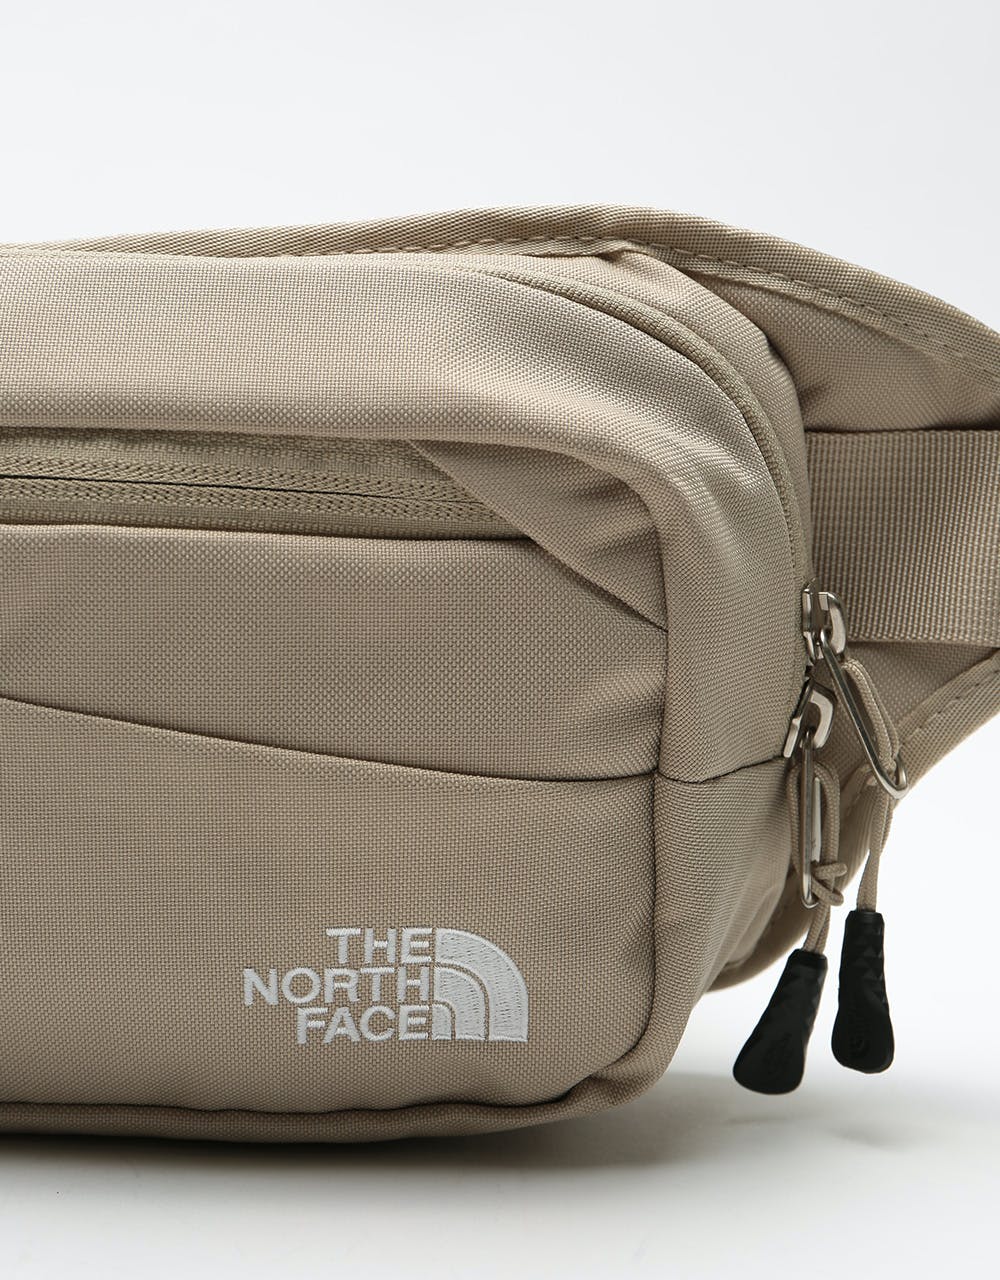 The North Face Bozer II Cross Body Bag - Crockery Beige/TNF White